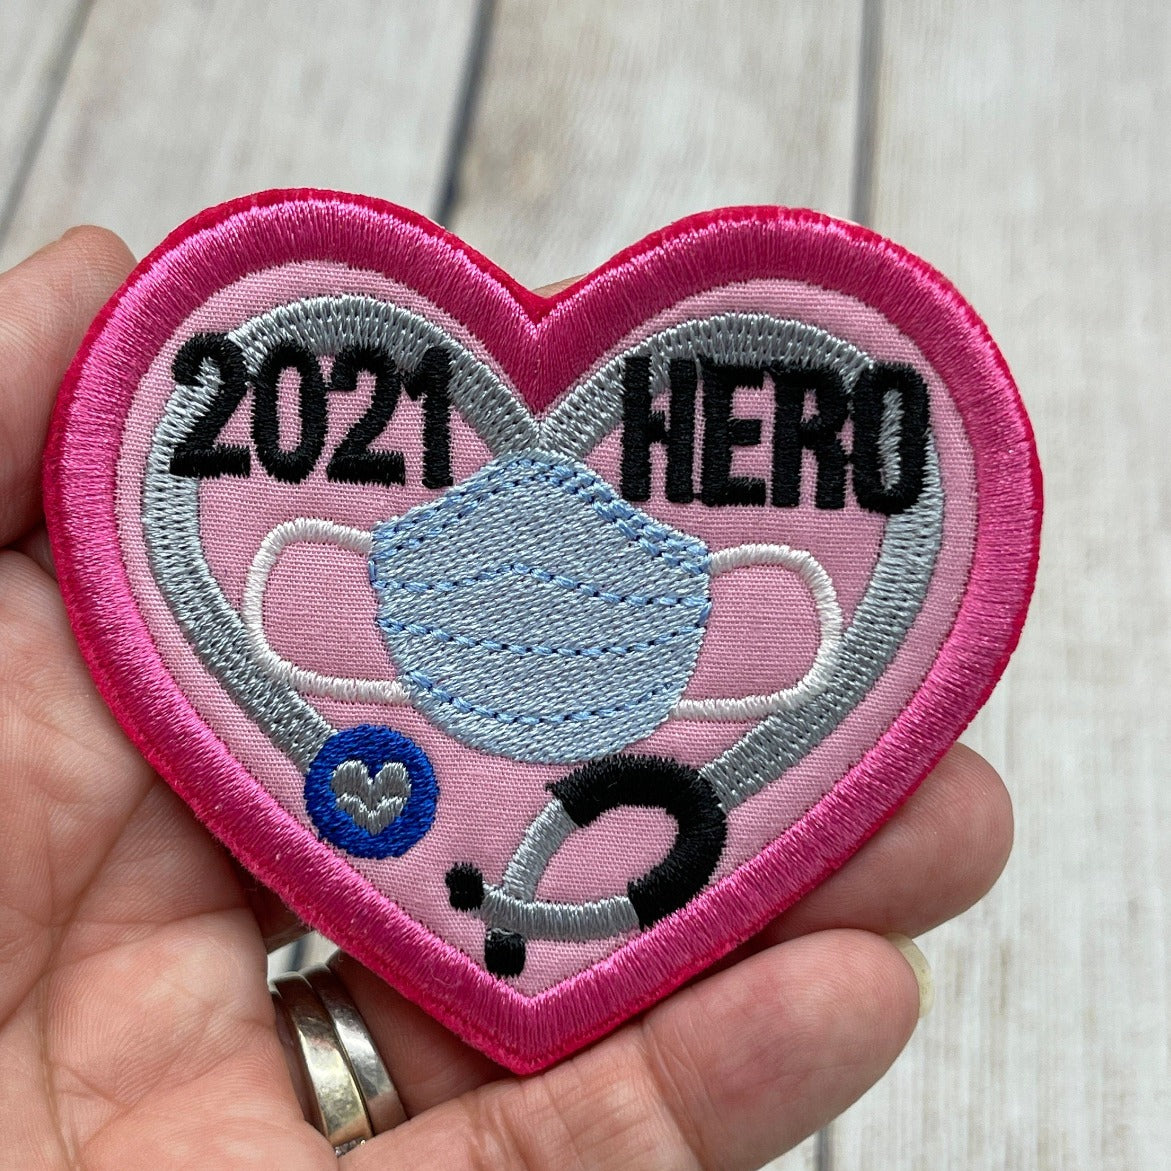 2021 healthcare hero heart patch pink closeup